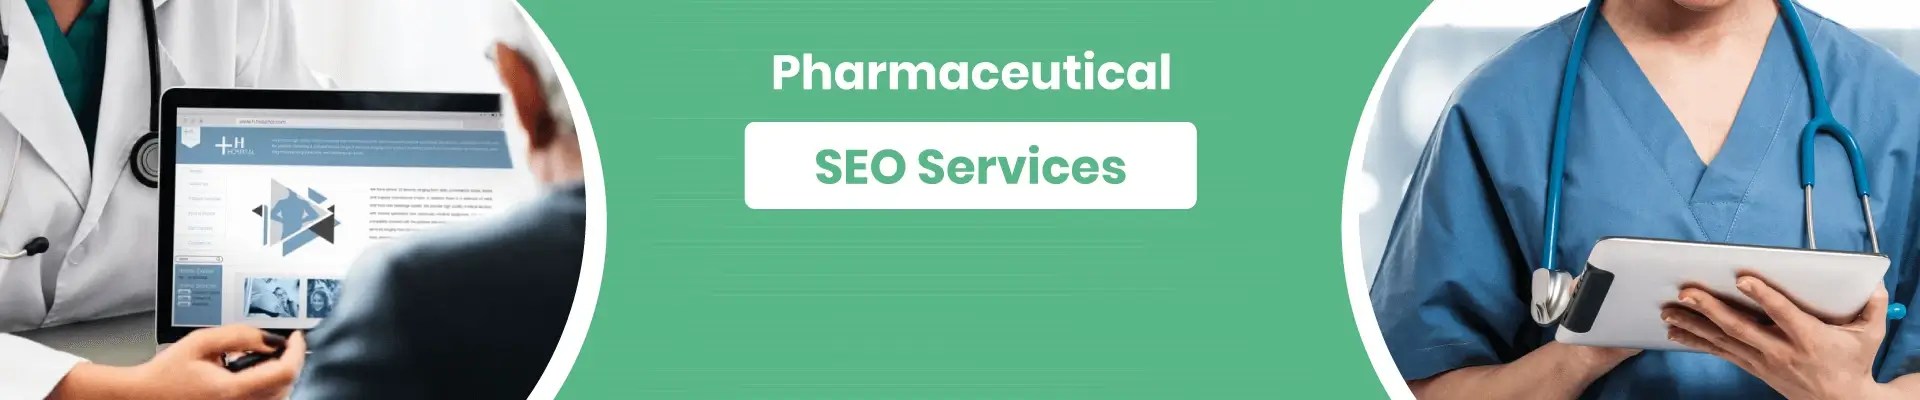 Best Pharmaceutical SEO Company | Hire Pharmaceutical SEO Expert